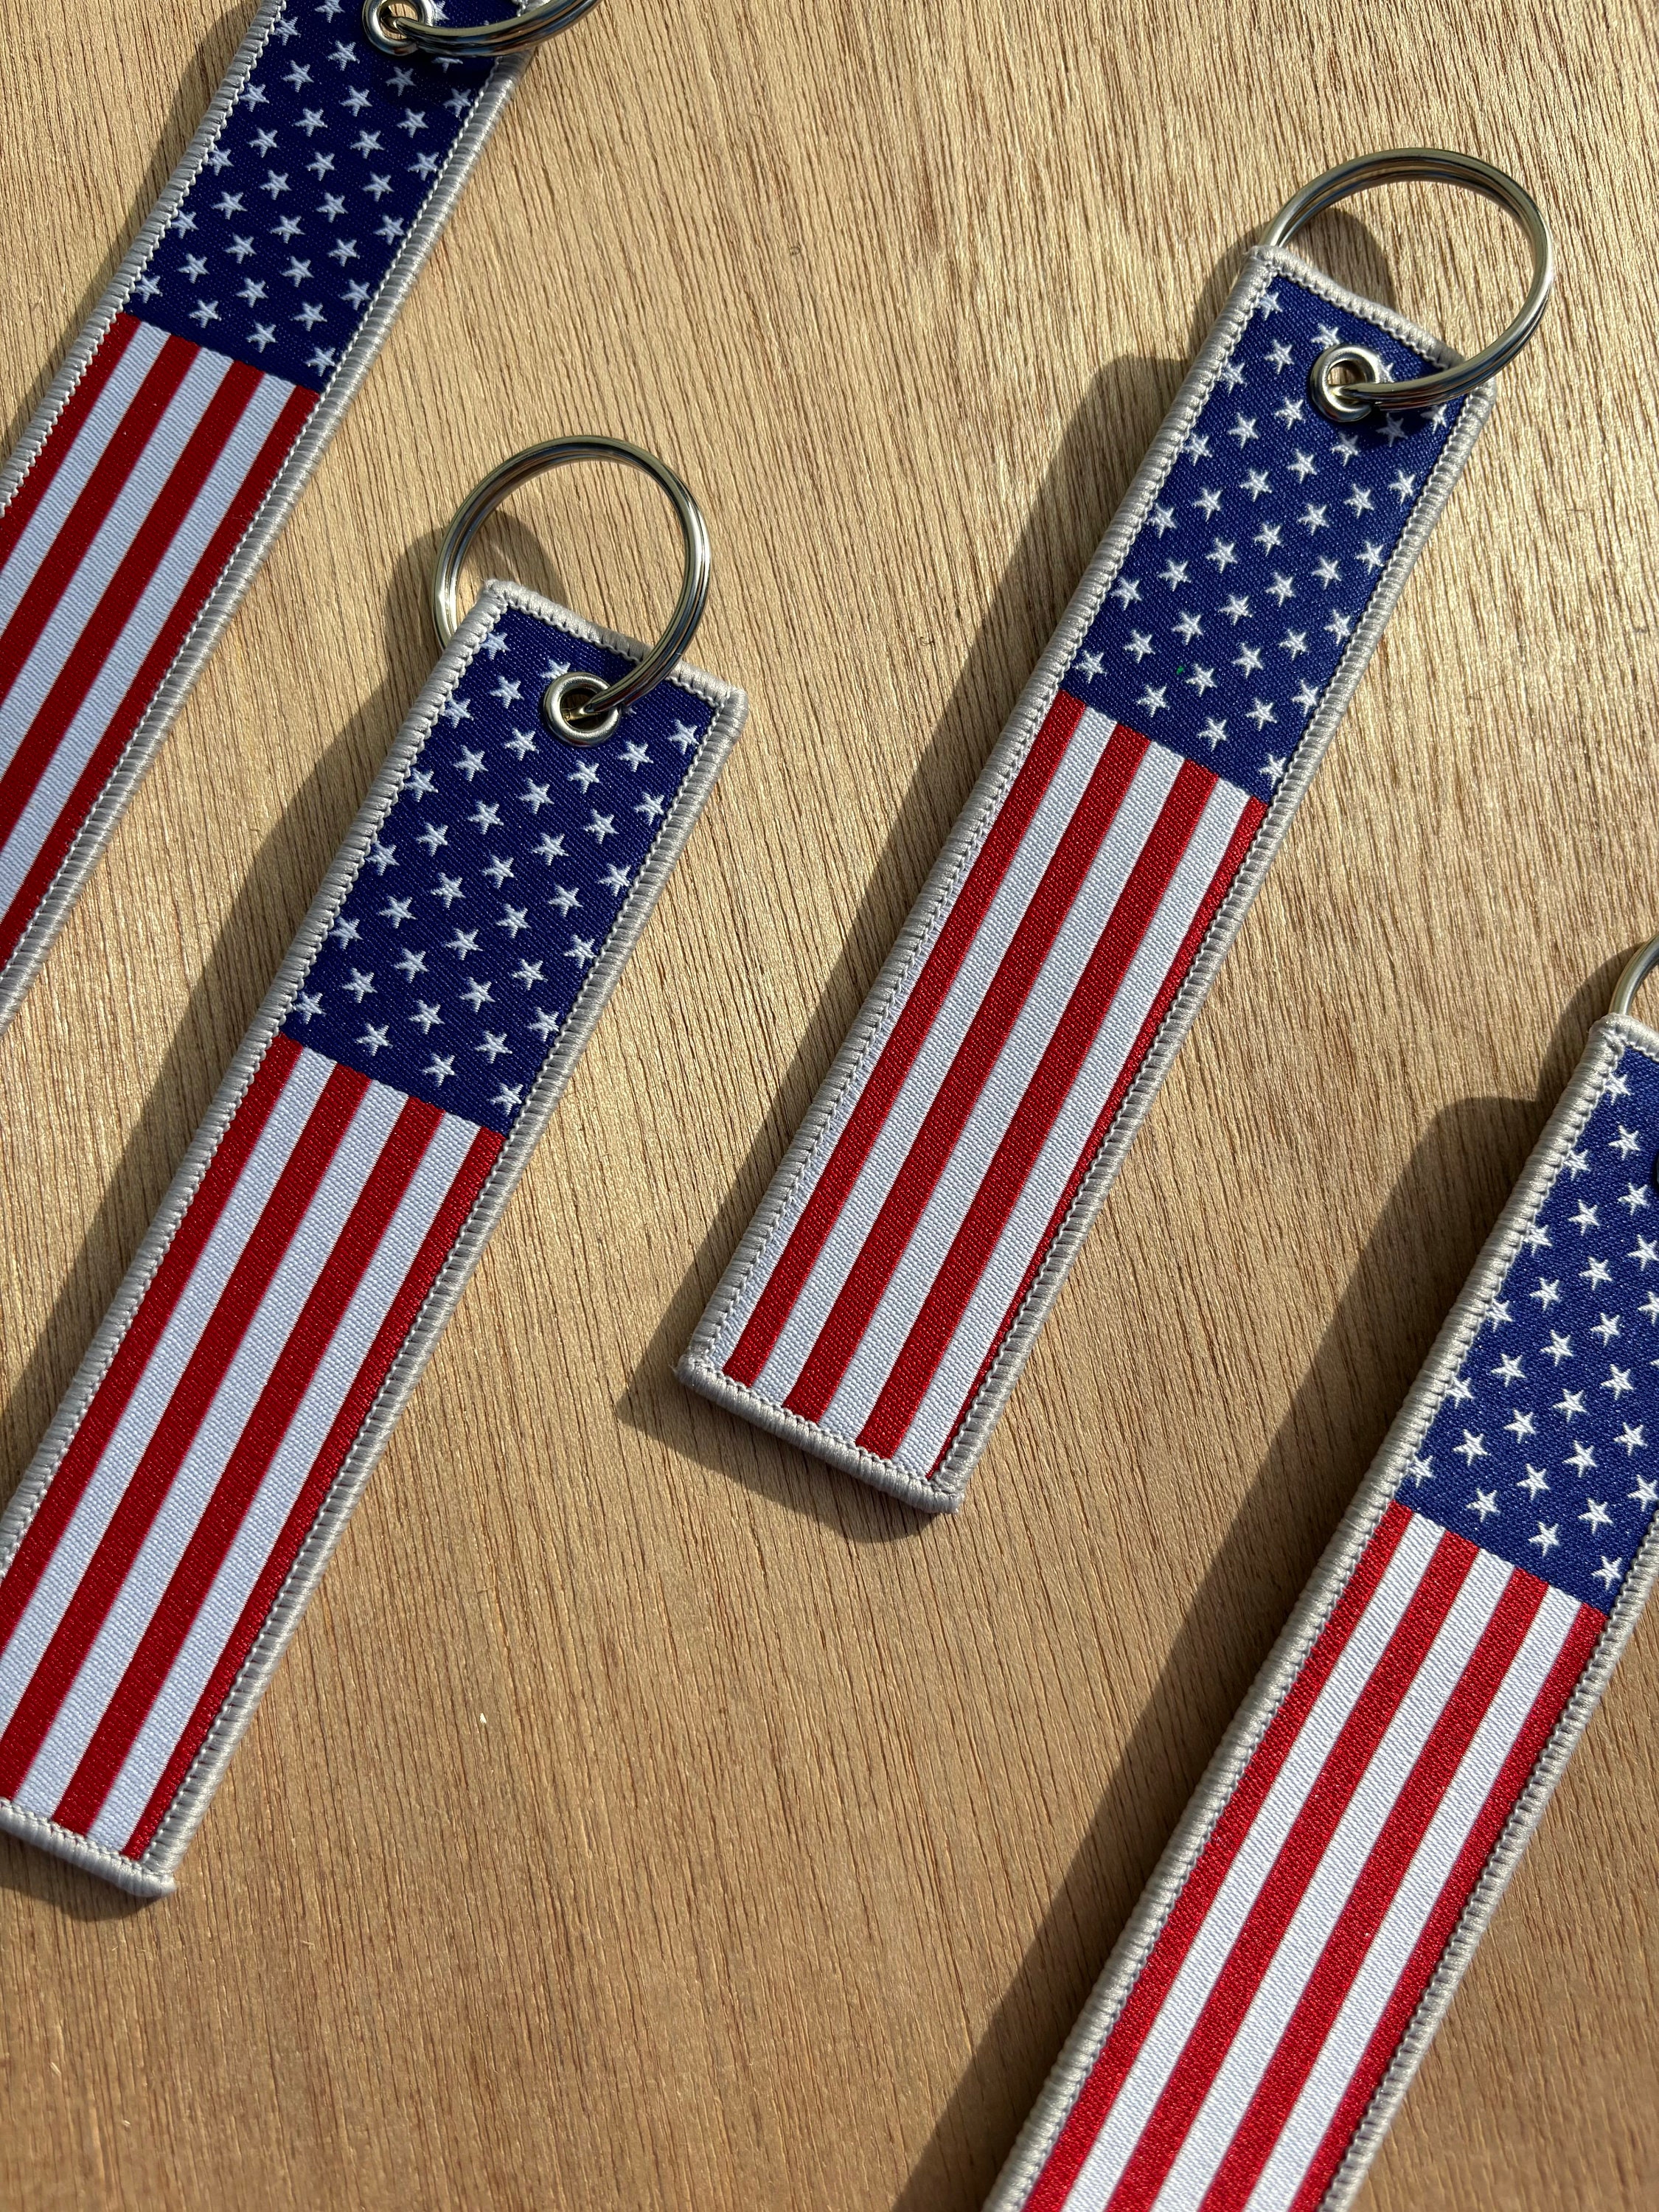 Bling American Flag Keychain Republican Handbag Charm Democrat